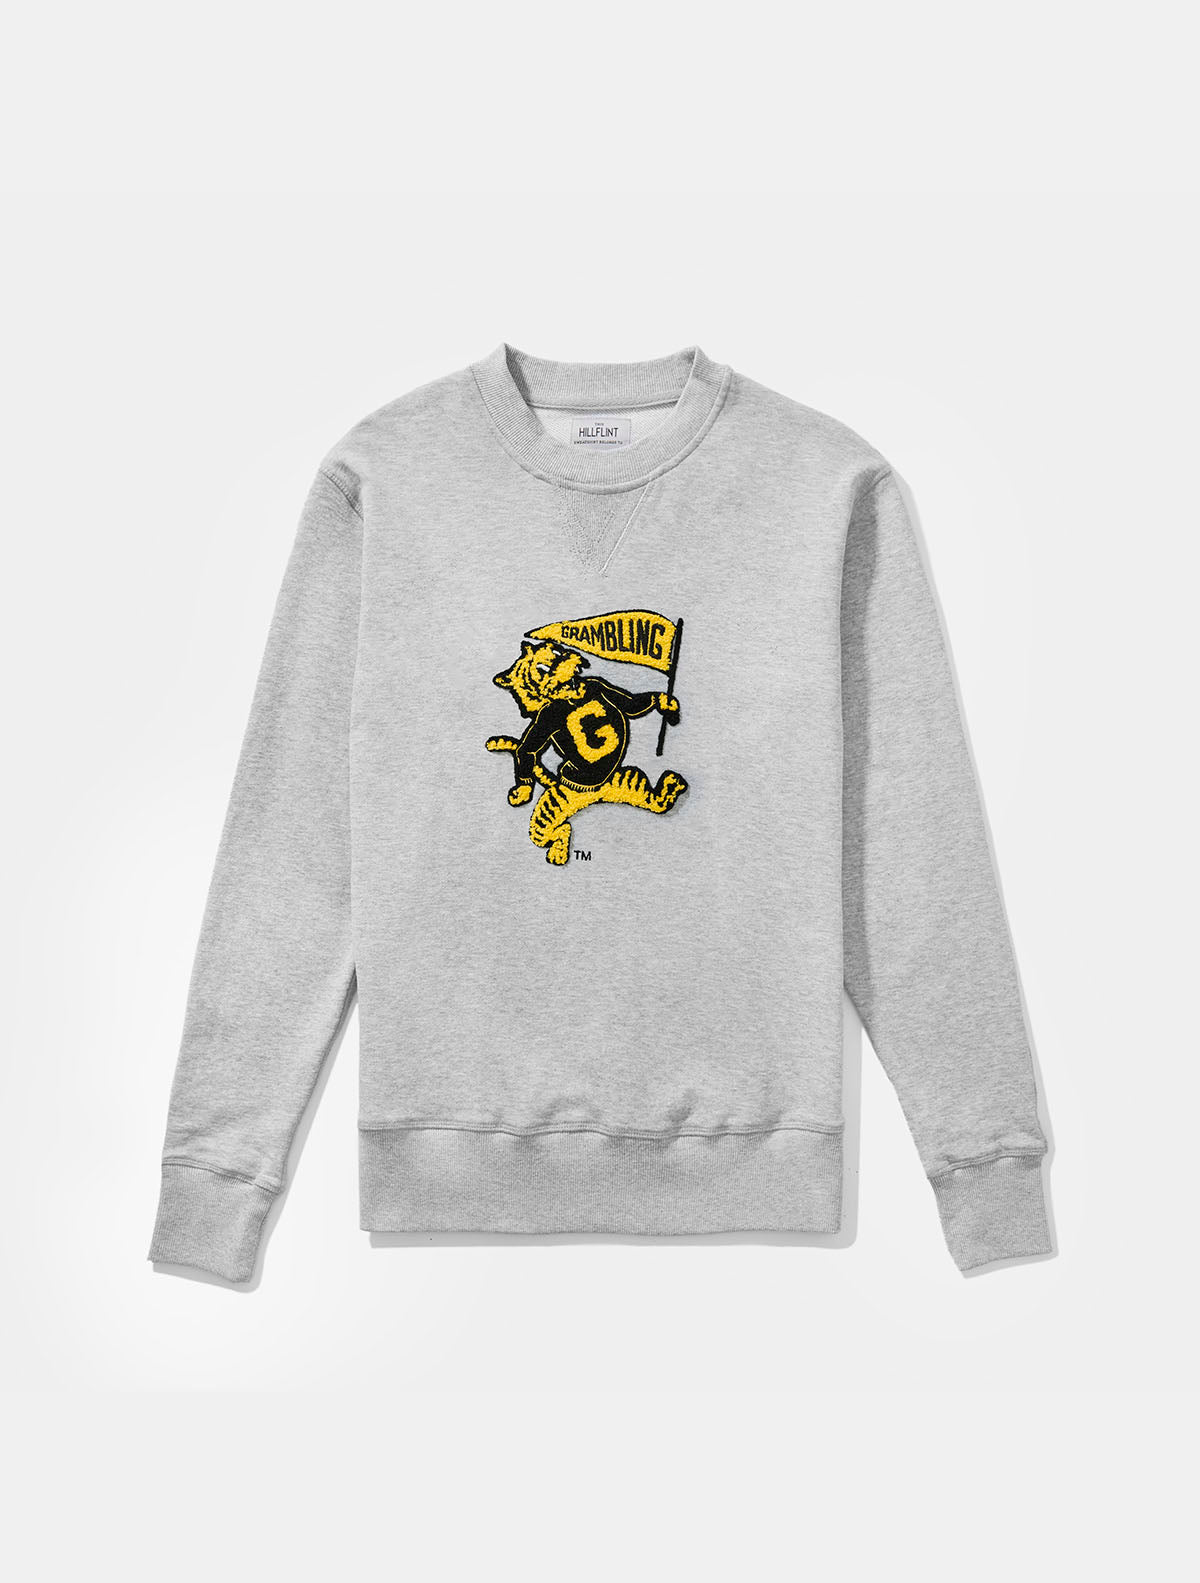 Grambling State Vintage Mascot Sweatshirt – Hillflint